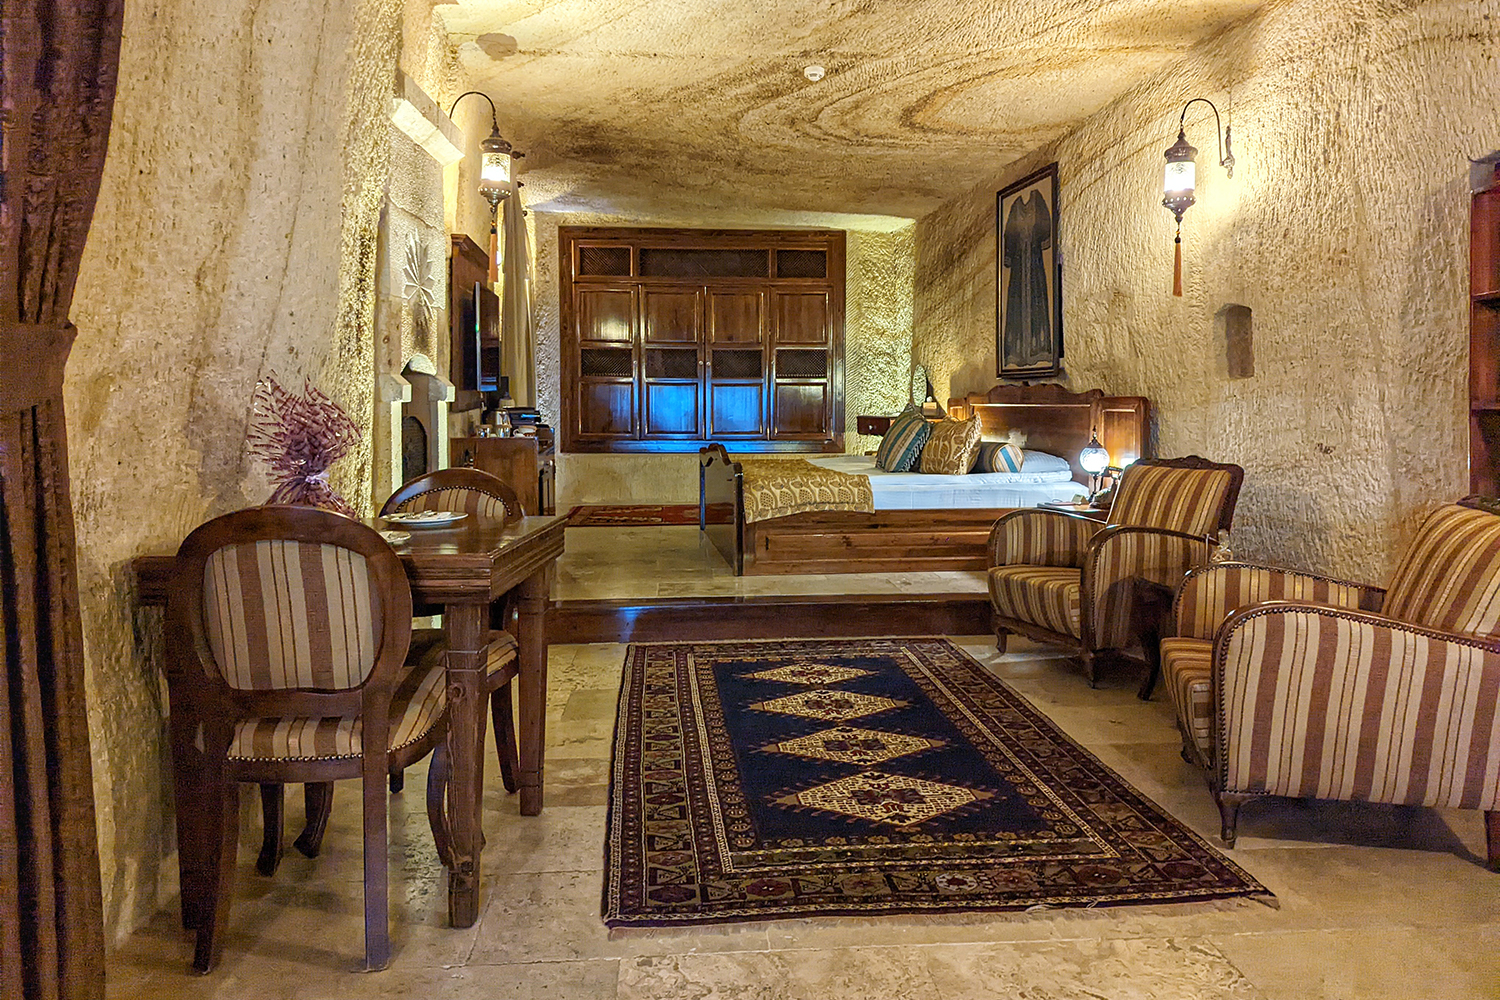 A room at Kayakapi Premium Caves in Turkey